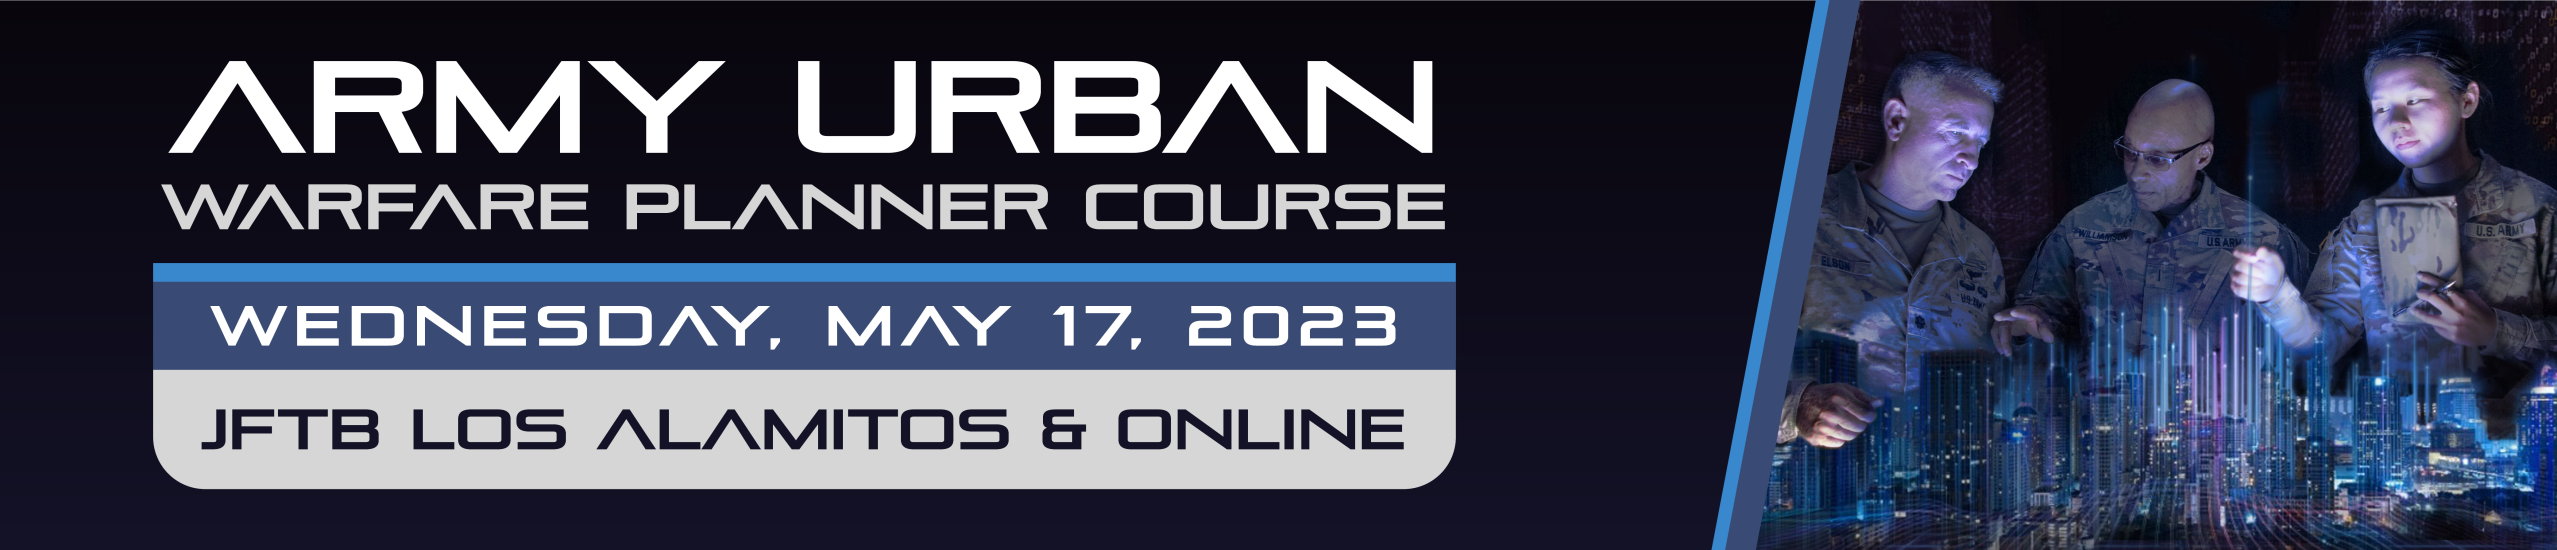 Army Urban Warfare Planner Course